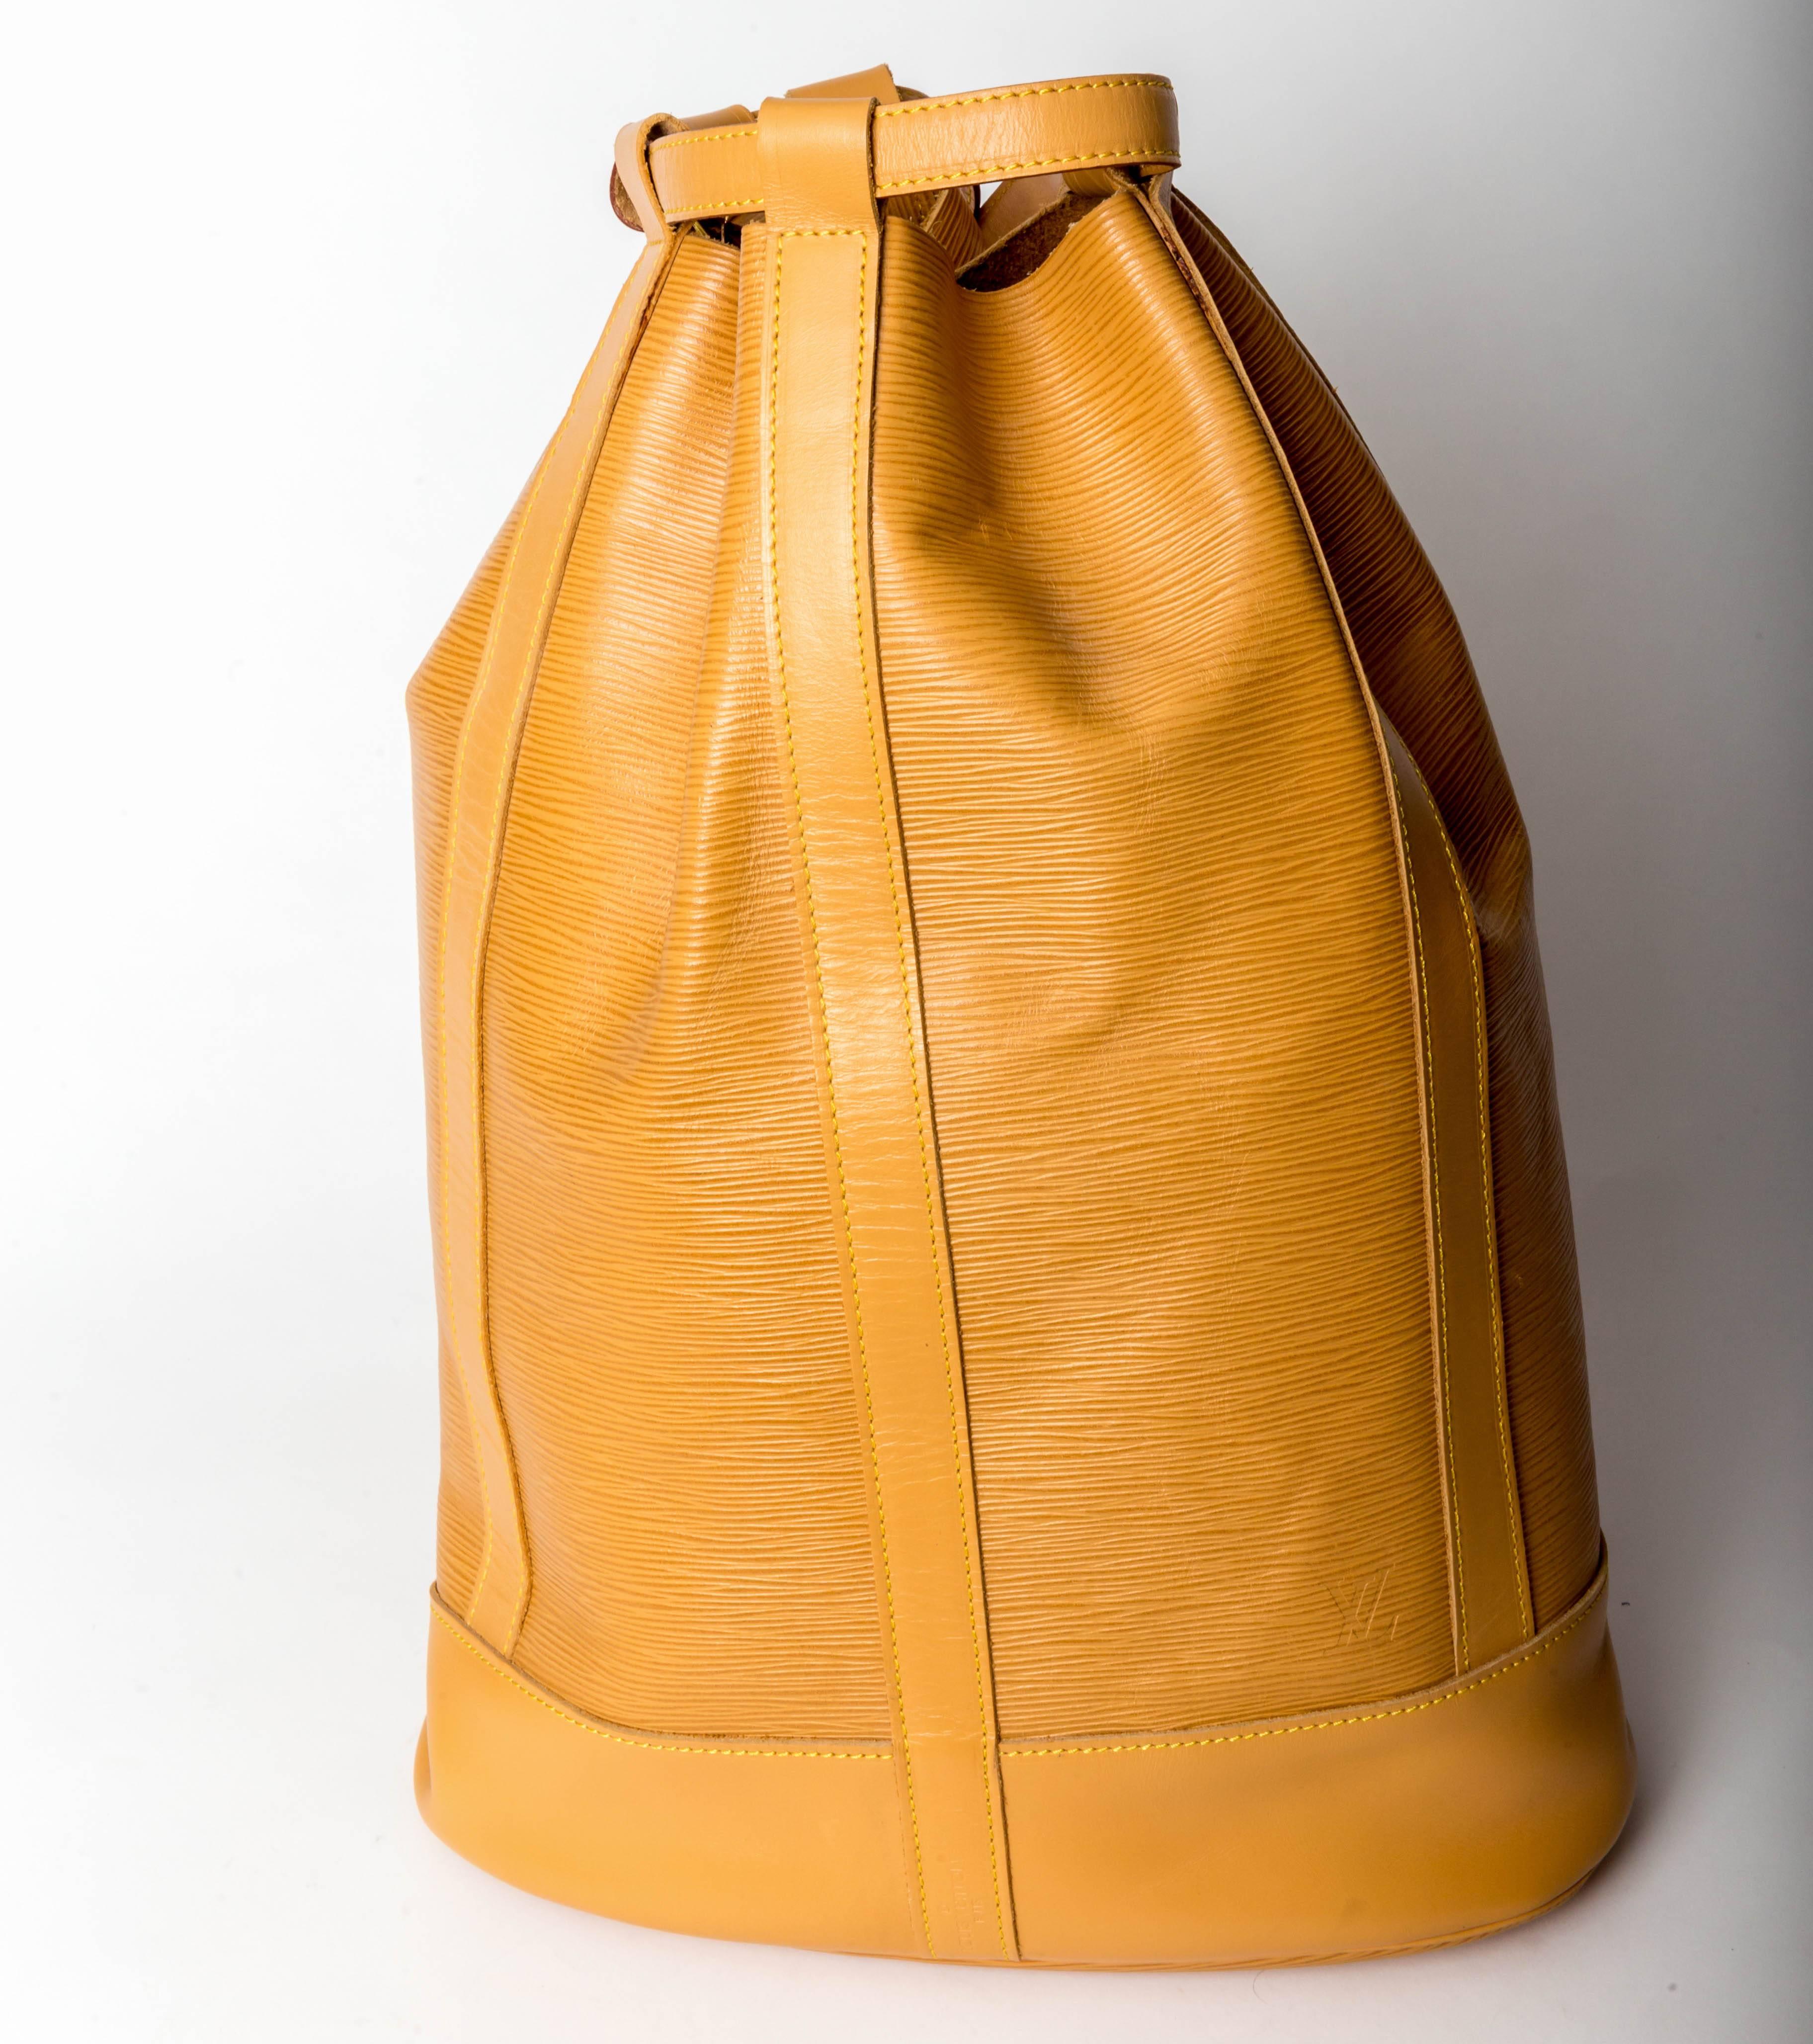 Amazing vintage Louis Vuitton duffel in mustard epi leather
One interior zip pocket
